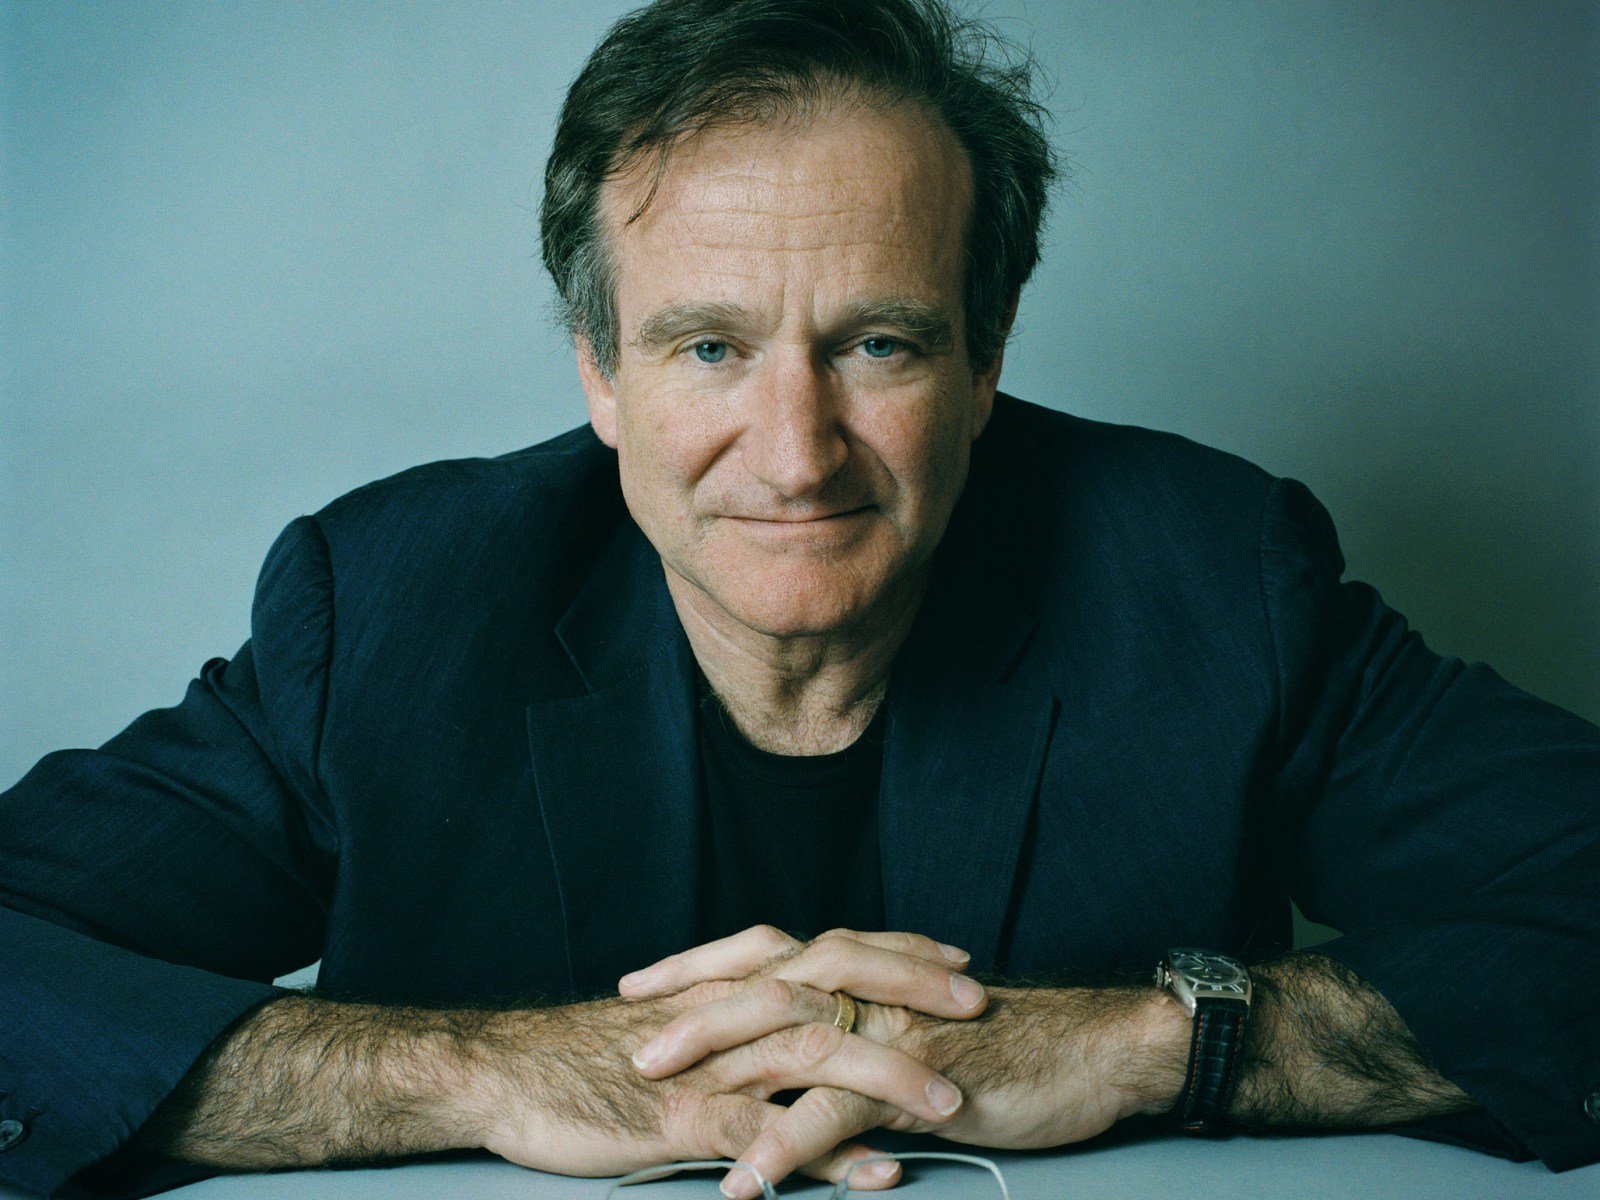 Robin-Williams.jpg